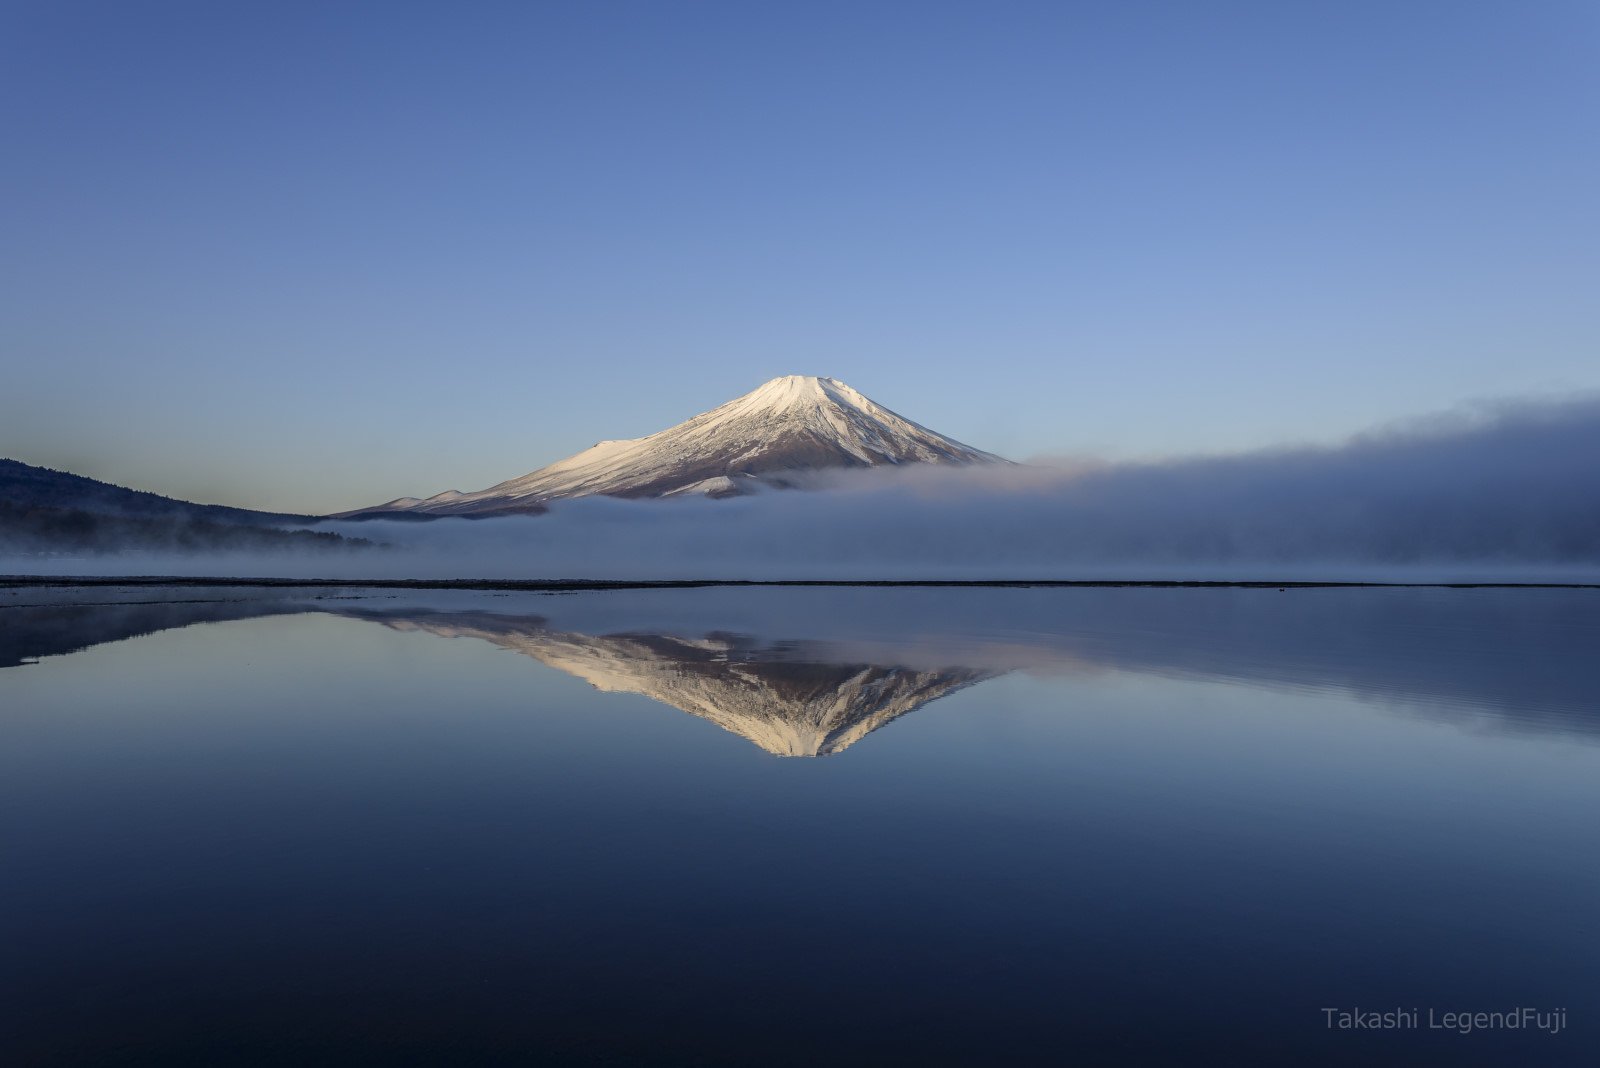 Fuji,mountain,Japan,lake,mirror,reflection,water,fog,cloud,sky,blue,morning,, Takashi